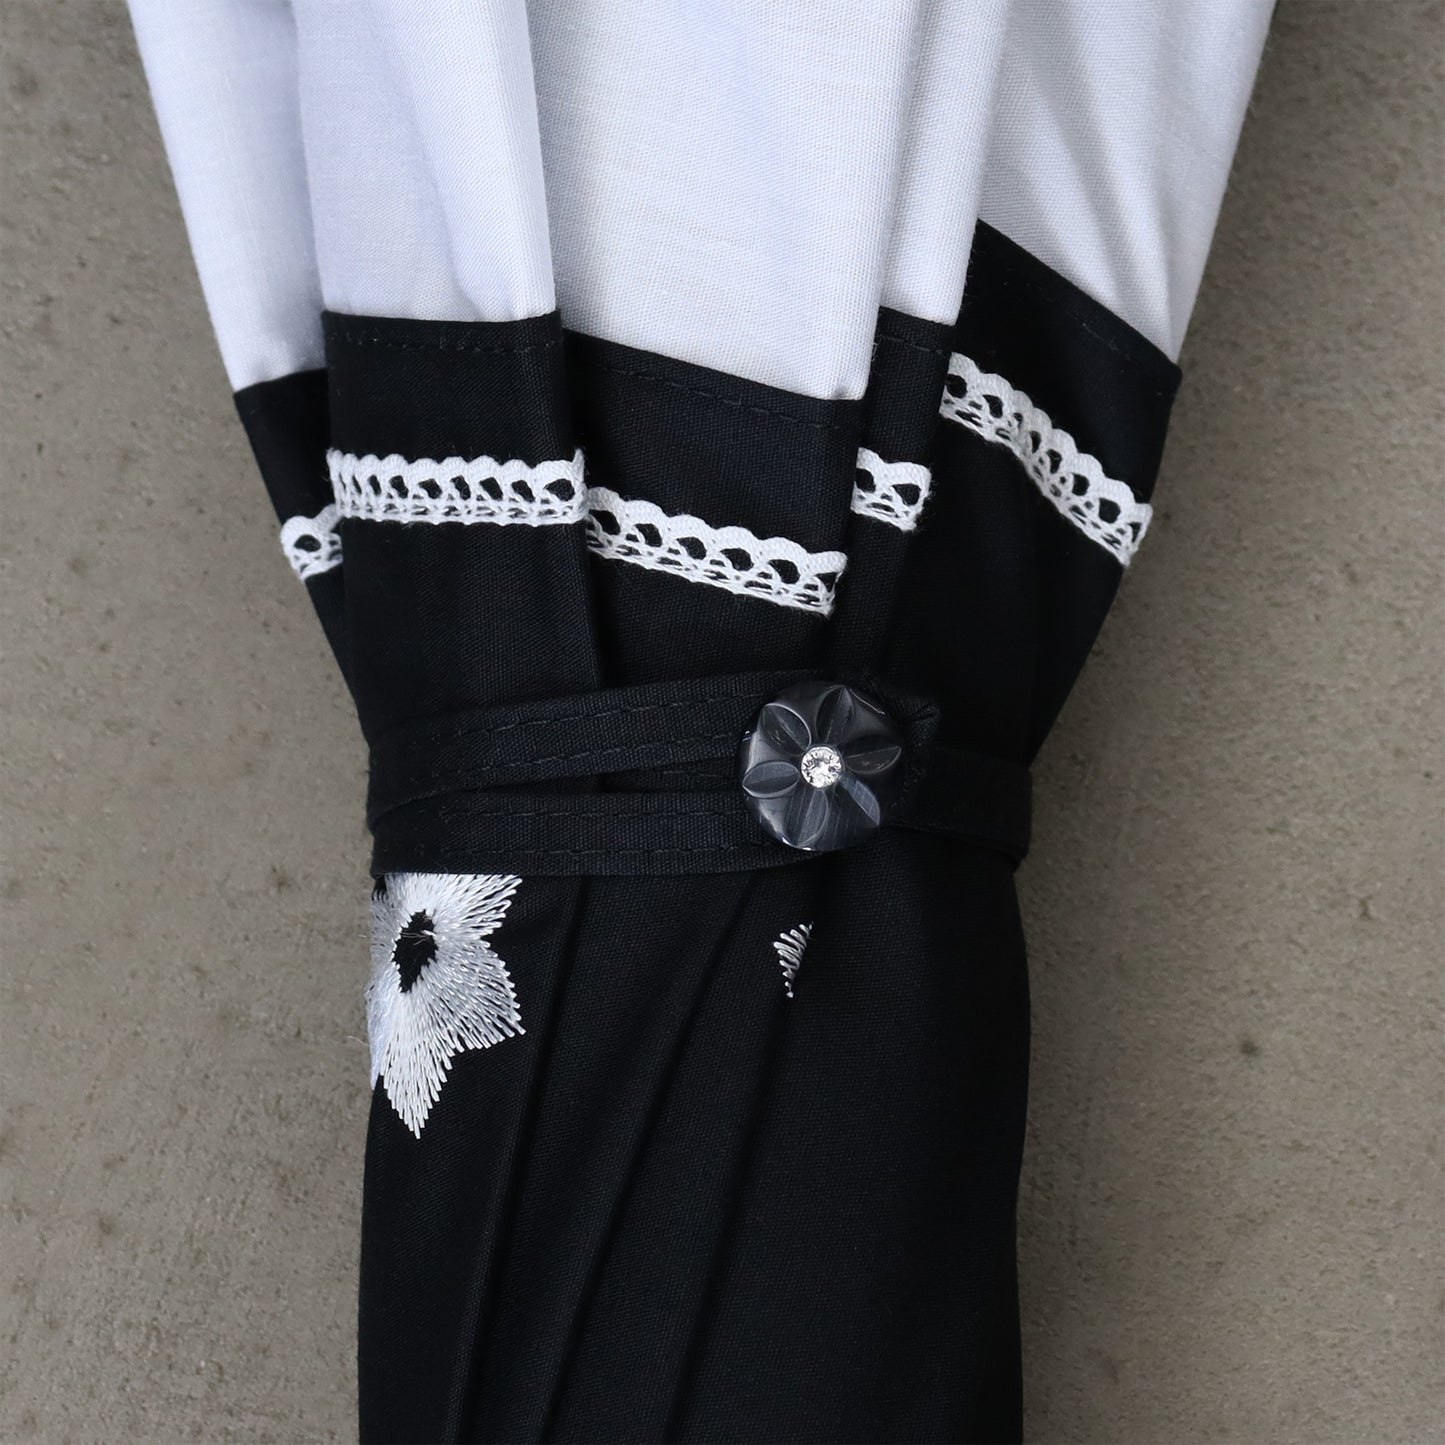 【New】clematis (クレマチス) - パゴダ 1級遮光 日傘 晴雨兼用 UVカット ショート丈 フリル 刺繍